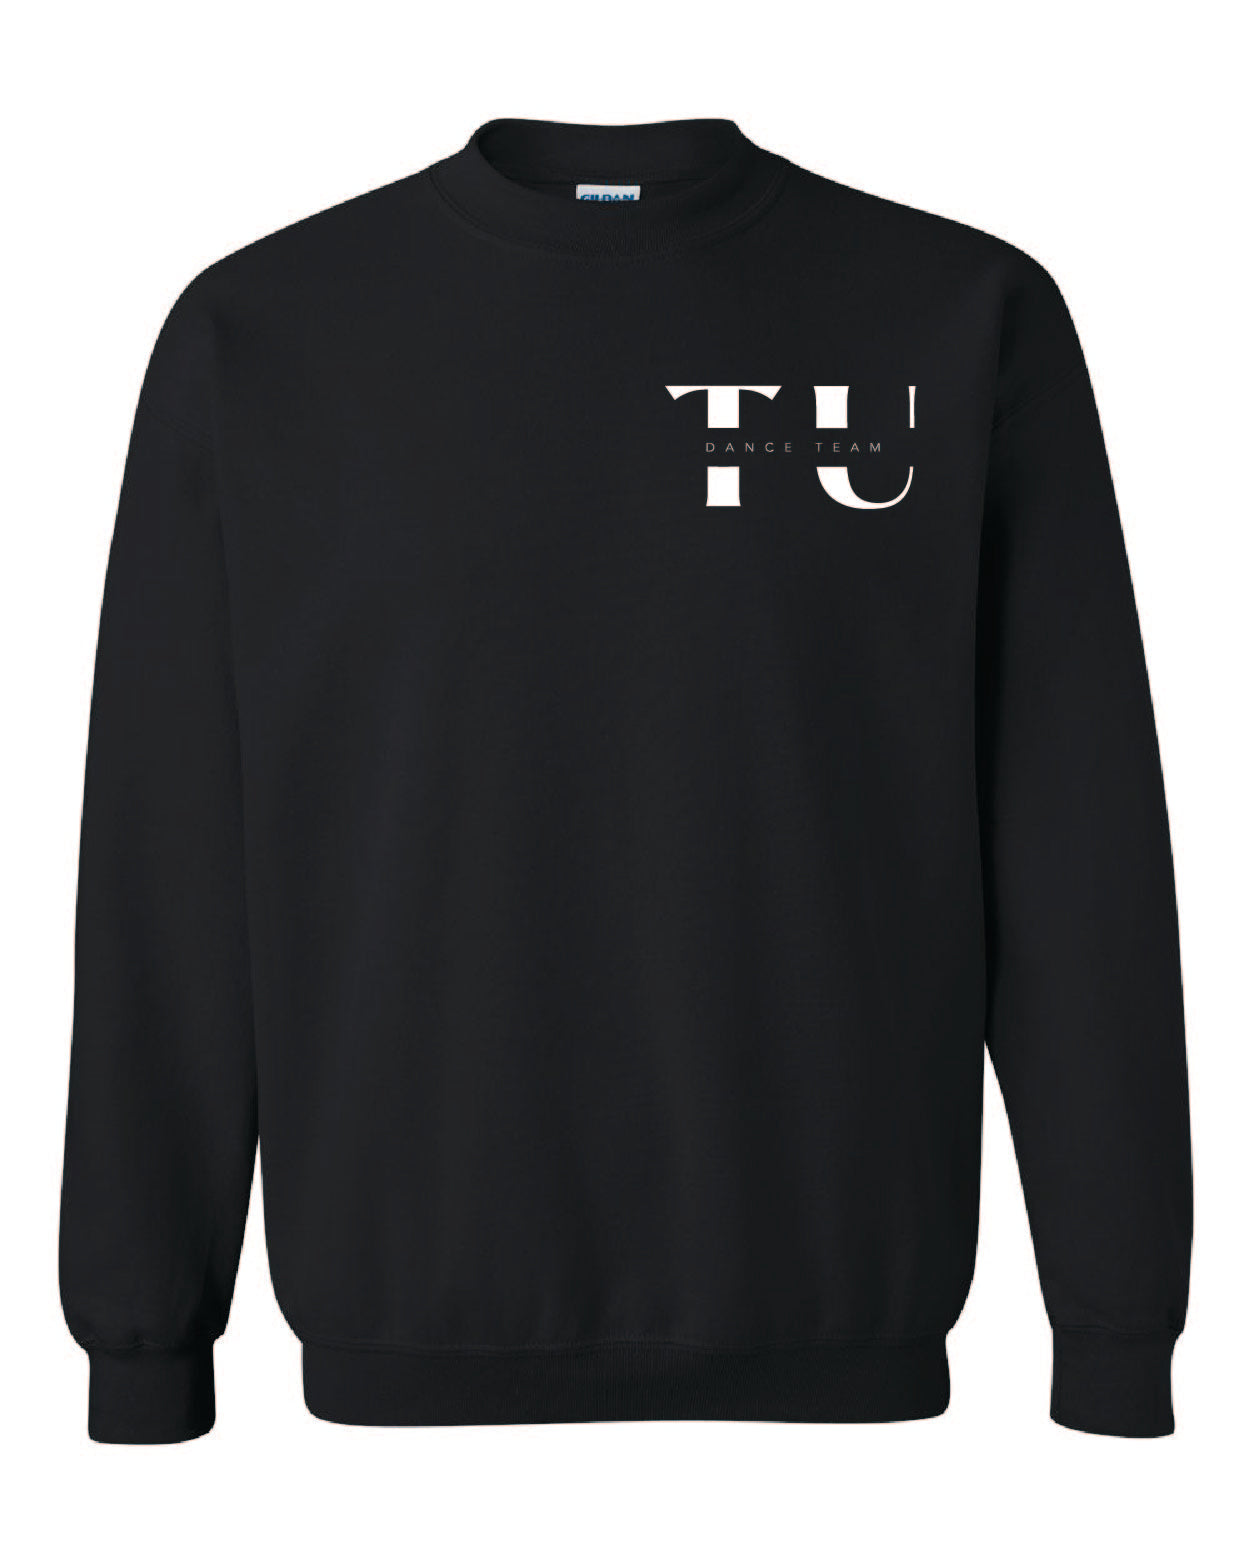 Towson Black Crewneck Sweatshirt